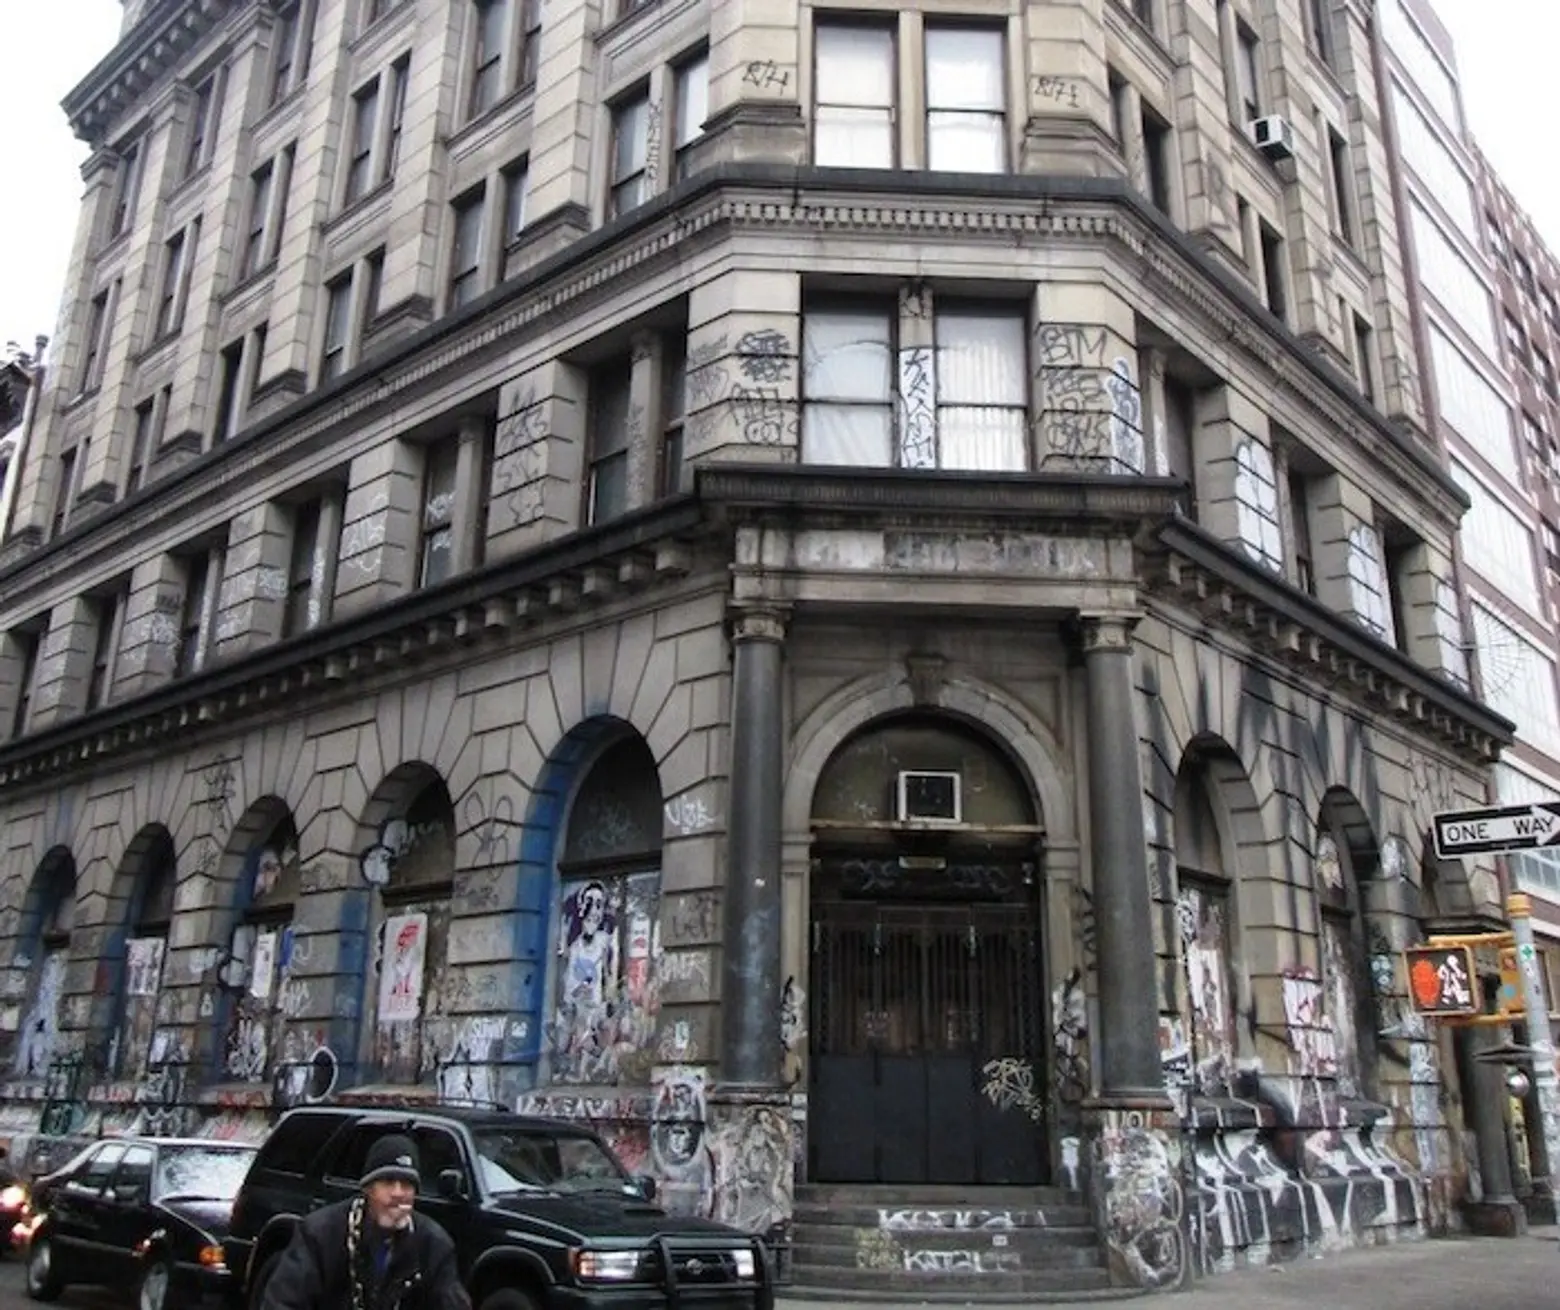 190 Bowery, Germania Bank, Jay Maisel, Cool dwellings, Noho, Converted bank